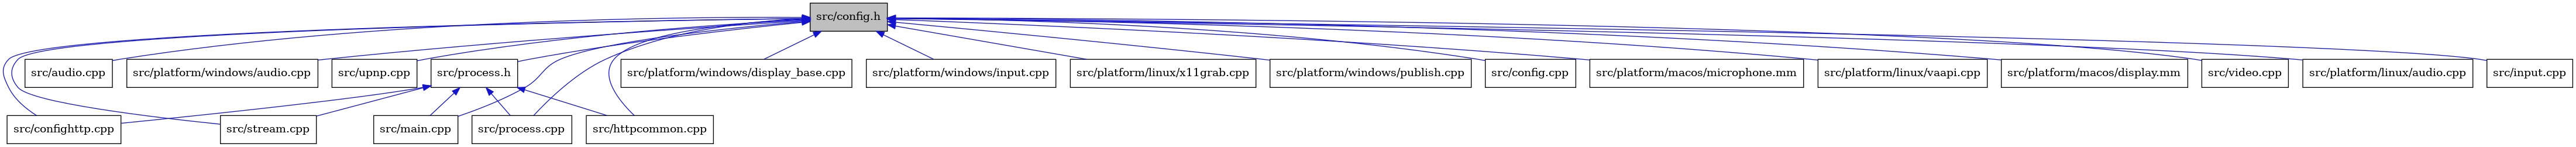 digraph {
    graph [bgcolor="#00000000"]
    node [shape=rectangle style=filled fillcolor="#FFFFFF" font=Helvetica padding=2]
    edge [color="#1414CE"]
    "4" [label="src/confighttp.cpp" tooltip="src/confighttp.cpp"]
    "2" [label="src/audio.cpp" tooltip="src/audio.cpp"]
    "1" [label="src/config.h" tooltip="src/config.h" fillcolor="#BFBFBF"]
    "13" [label="src/platform/windows/audio.cpp" tooltip="src/platform/windows/audio.cpp"]
    "20" [label="src/upnp.cpp" tooltip="src/upnp.cpp"]
    "19" [label="src/stream.cpp" tooltip="src/stream.cpp"]
    "14" [label="src/platform/windows/display_base.cpp" tooltip="src/platform/windows/display_base.cpp"]
    "15" [label="src/platform/windows/input.cpp" tooltip="src/platform/windows/input.cpp"]
    "10" [label="src/platform/linux/x11grab.cpp" tooltip="src/platform/linux/x11grab.cpp"]
    "16" [label="src/platform/windows/publish.cpp" tooltip="src/platform/windows/publish.cpp"]
    "17" [label="src/process.h" tooltip="src/process.h"]
    "7" [label="src/main.cpp" tooltip="src/main.cpp"]
    "18" [label="src/process.cpp" tooltip="src/process.cpp"]
    "3" [label="src/config.cpp" tooltip="src/config.cpp"]
    "12" [label="src/platform/macos/microphone.mm" tooltip="src/platform/macos/microphone.mm"]
    "9" [label="src/platform/linux/vaapi.cpp" tooltip="src/platform/linux/vaapi.cpp"]
    "11" [label="src/platform/macos/display.mm" tooltip="src/platform/macos/display.mm"]
    "5" [label="src/httpcommon.cpp" tooltip="src/httpcommon.cpp"]
    "21" [label="src/video.cpp" tooltip="src/video.cpp"]
    "8" [label="src/platform/linux/audio.cpp" tooltip="src/platform/linux/audio.cpp"]
    "6" [label="src/input.cpp" tooltip="src/input.cpp"]
    "1" -> "2" [dir=back tooltip="include"]
    "1" -> "3" [dir=back tooltip="include"]
    "1" -> "4" [dir=back tooltip="include"]
    "1" -> "5" [dir=back tooltip="include"]
    "1" -> "6" [dir=back tooltip="include"]
    "1" -> "7" [dir=back tooltip="include"]
    "1" -> "8" [dir=back tooltip="include"]
    "1" -> "9" [dir=back tooltip="include"]
    "1" -> "10" [dir=back tooltip="include"]
    "1" -> "11" [dir=back tooltip="include"]
    "1" -> "12" [dir=back tooltip="include"]
    "1" -> "13" [dir=back tooltip="include"]
    "1" -> "14" [dir=back tooltip="include"]
    "1" -> "15" [dir=back tooltip="include"]
    "1" -> "16" [dir=back tooltip="include"]
    "1" -> "17" [dir=back tooltip="include"]
    "1" -> "18" [dir=back tooltip="include"]
    "1" -> "19" [dir=back tooltip="include"]
    "1" -> "20" [dir=back tooltip="include"]
    "1" -> "21" [dir=back tooltip="include"]
    "17" -> "4" [dir=back tooltip="include"]
    "17" -> "5" [dir=back tooltip="include"]
    "17" -> "7" [dir=back tooltip="include"]
    "17" -> "18" [dir=back tooltip="include"]
    "17" -> "19" [dir=back tooltip="include"]
}